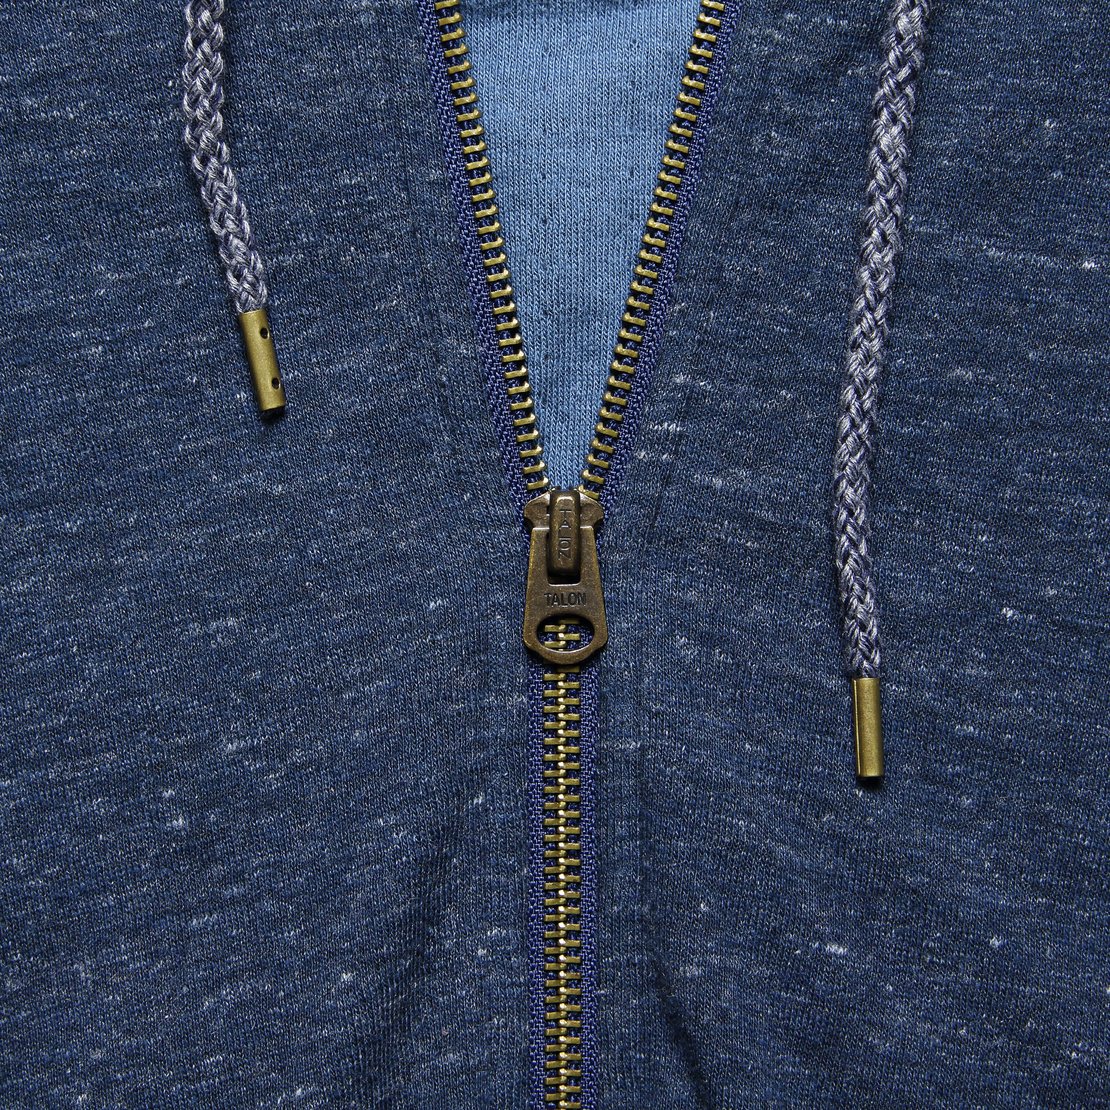 Dual Knit Zip Hoodie - Navy - Faherty - STAG Provisions - Tops - Fleece / Sweatshirt